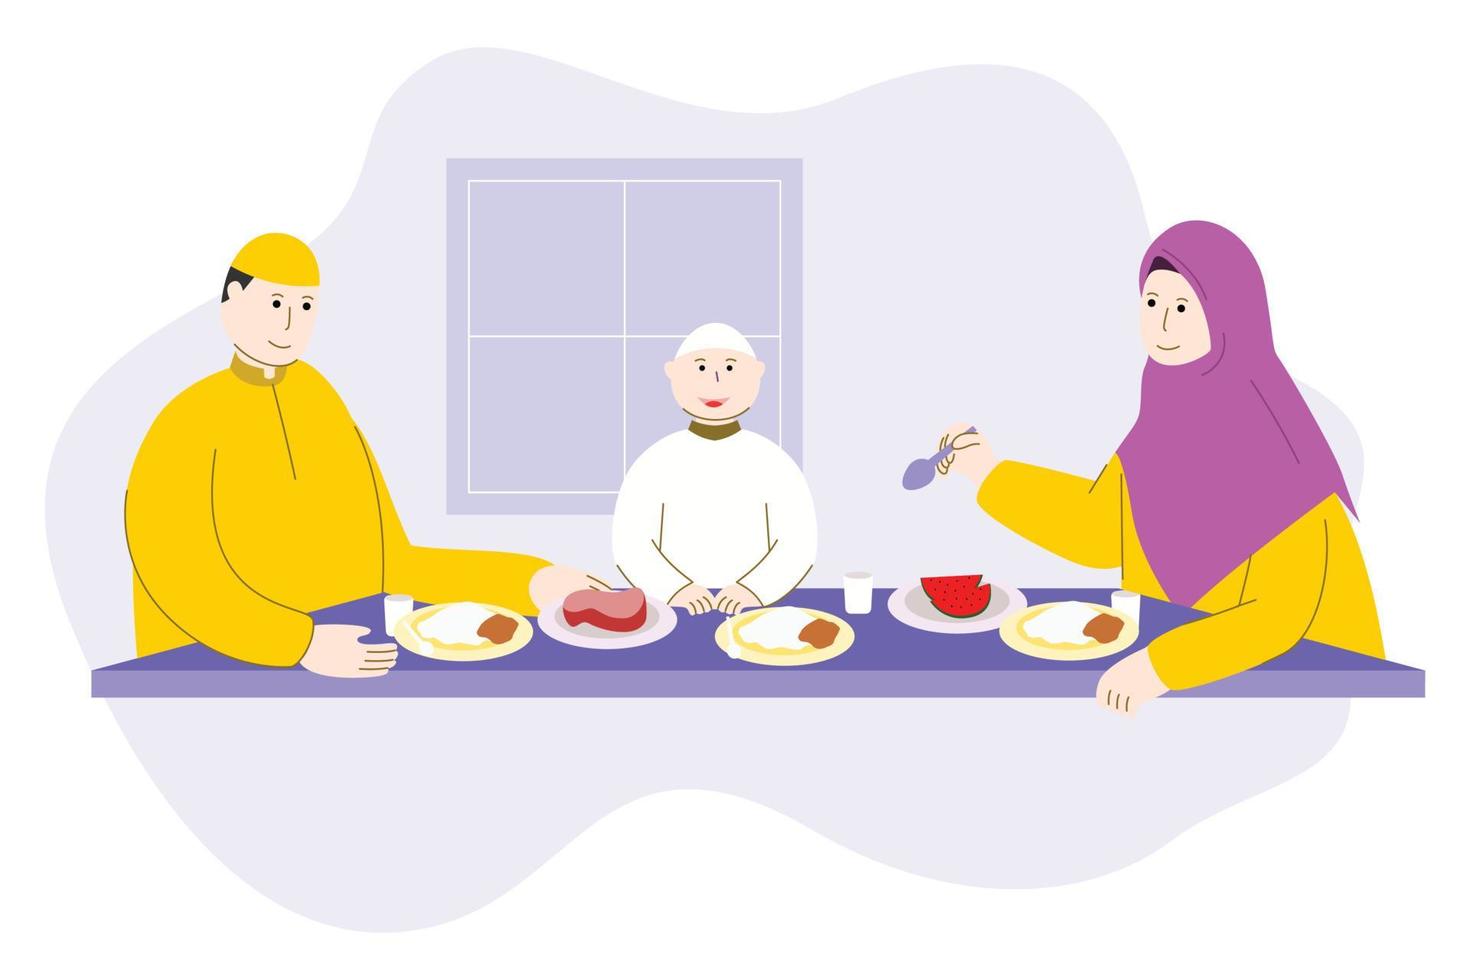 familia musulmana sahur e iftar juntos en ramadan kareem, celebrando ramadan mubarak ilustración vectorial vector